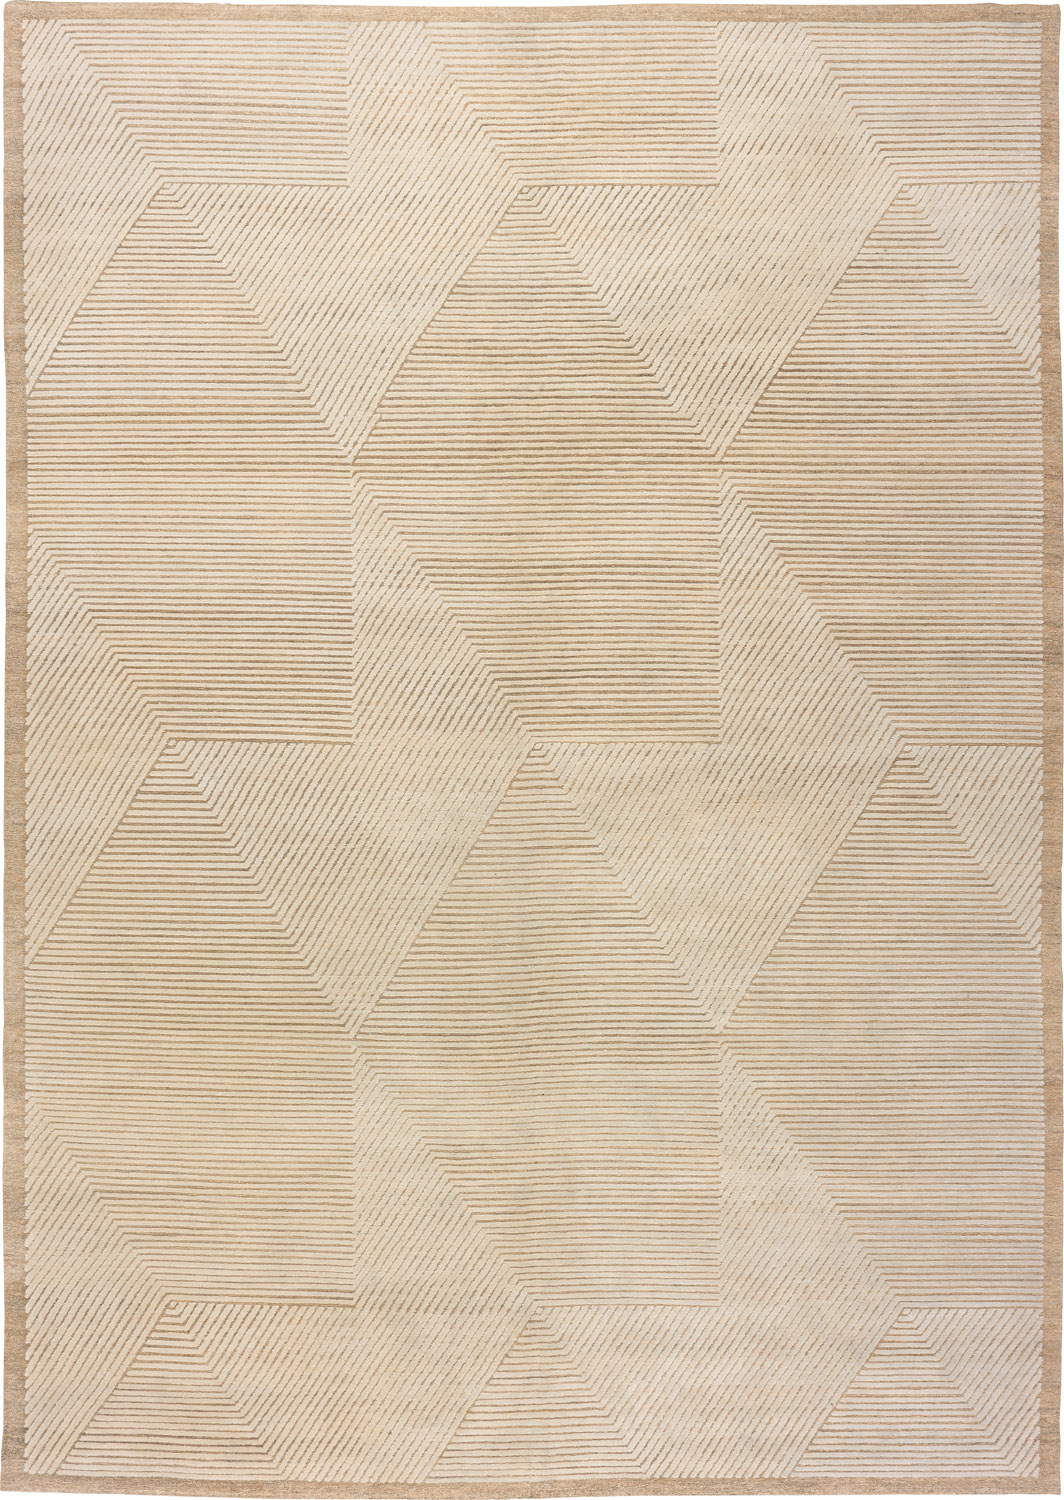 26062 Boggeri | Custom Modern & 20th Century Design Carpet | FJ Hakimian | Carpet Gallery in NYC